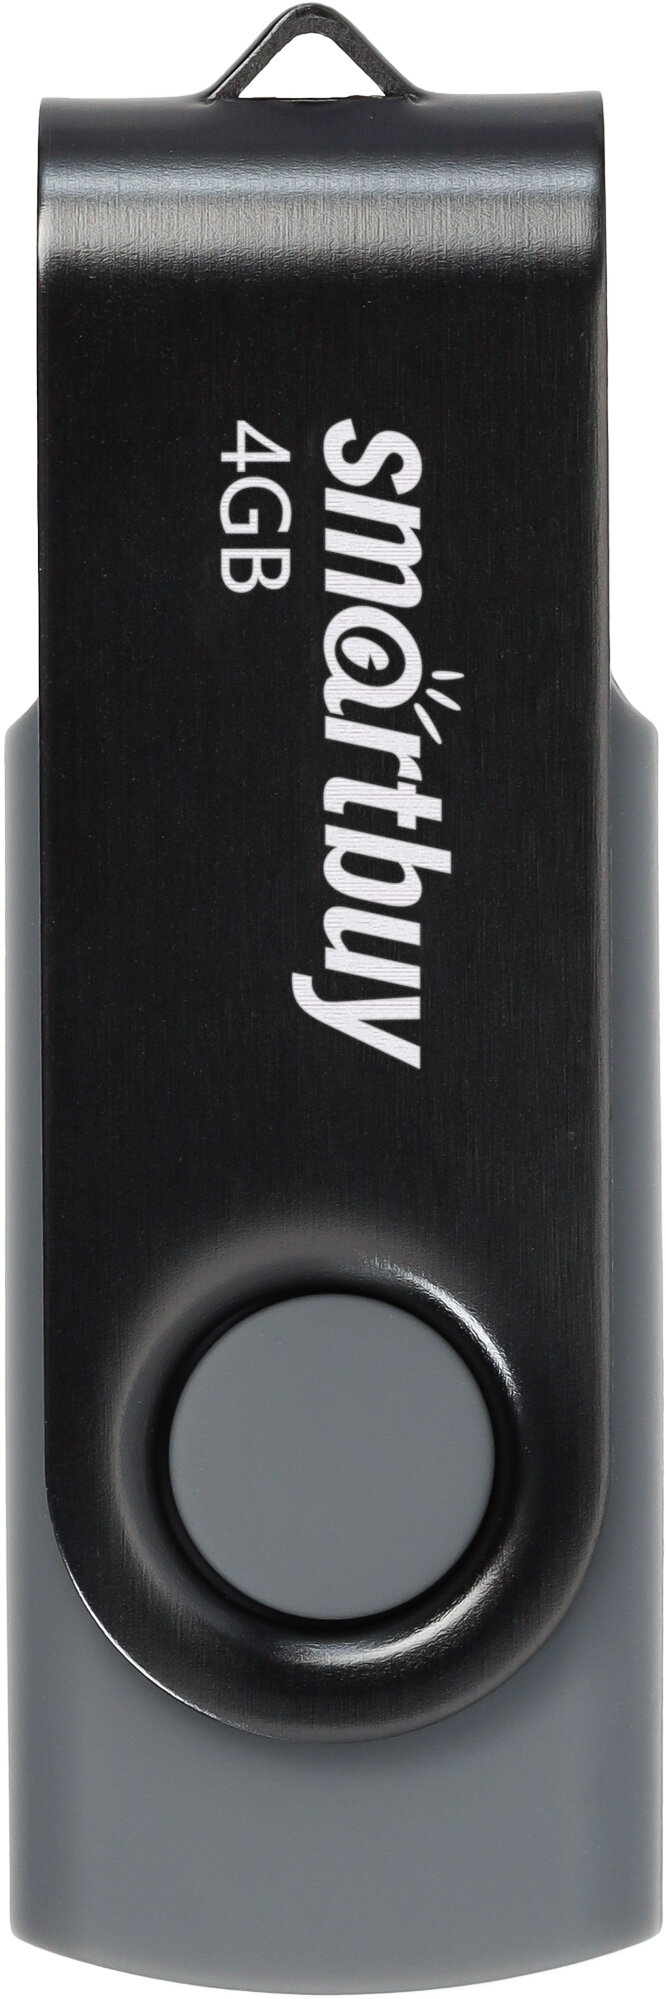 Флеш-накопитель USB 2.0 Smartbuy 4GB Twist (SB004GB2TWK), черный